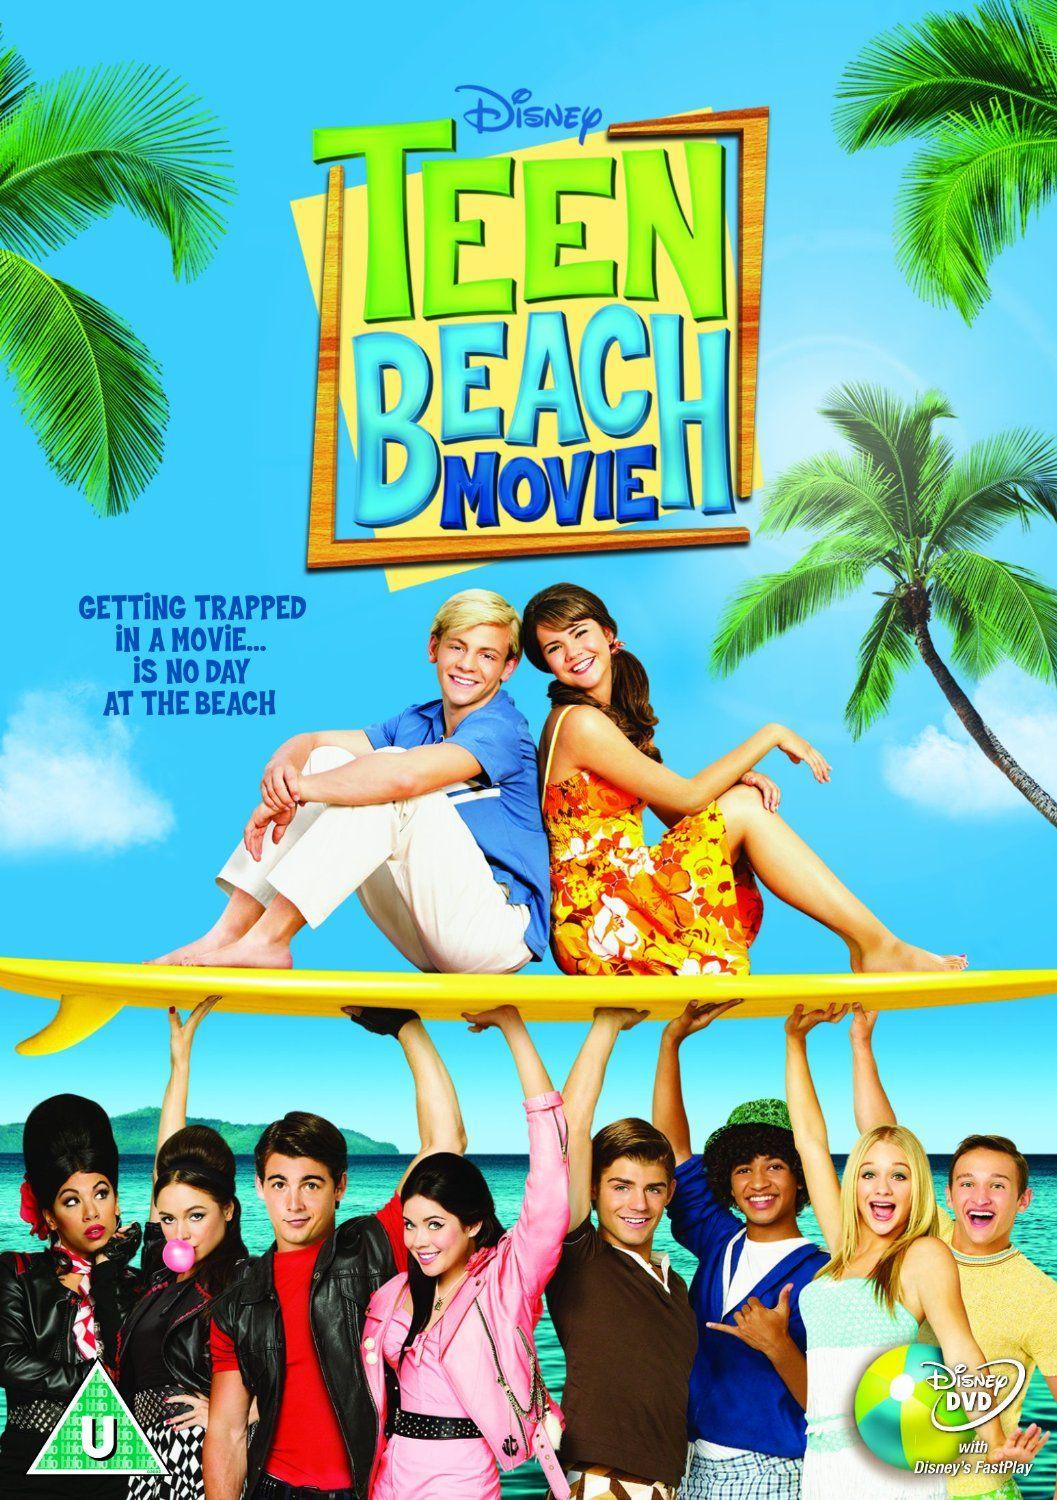 1880x1058px Teen Beach Movie 529.34 KB